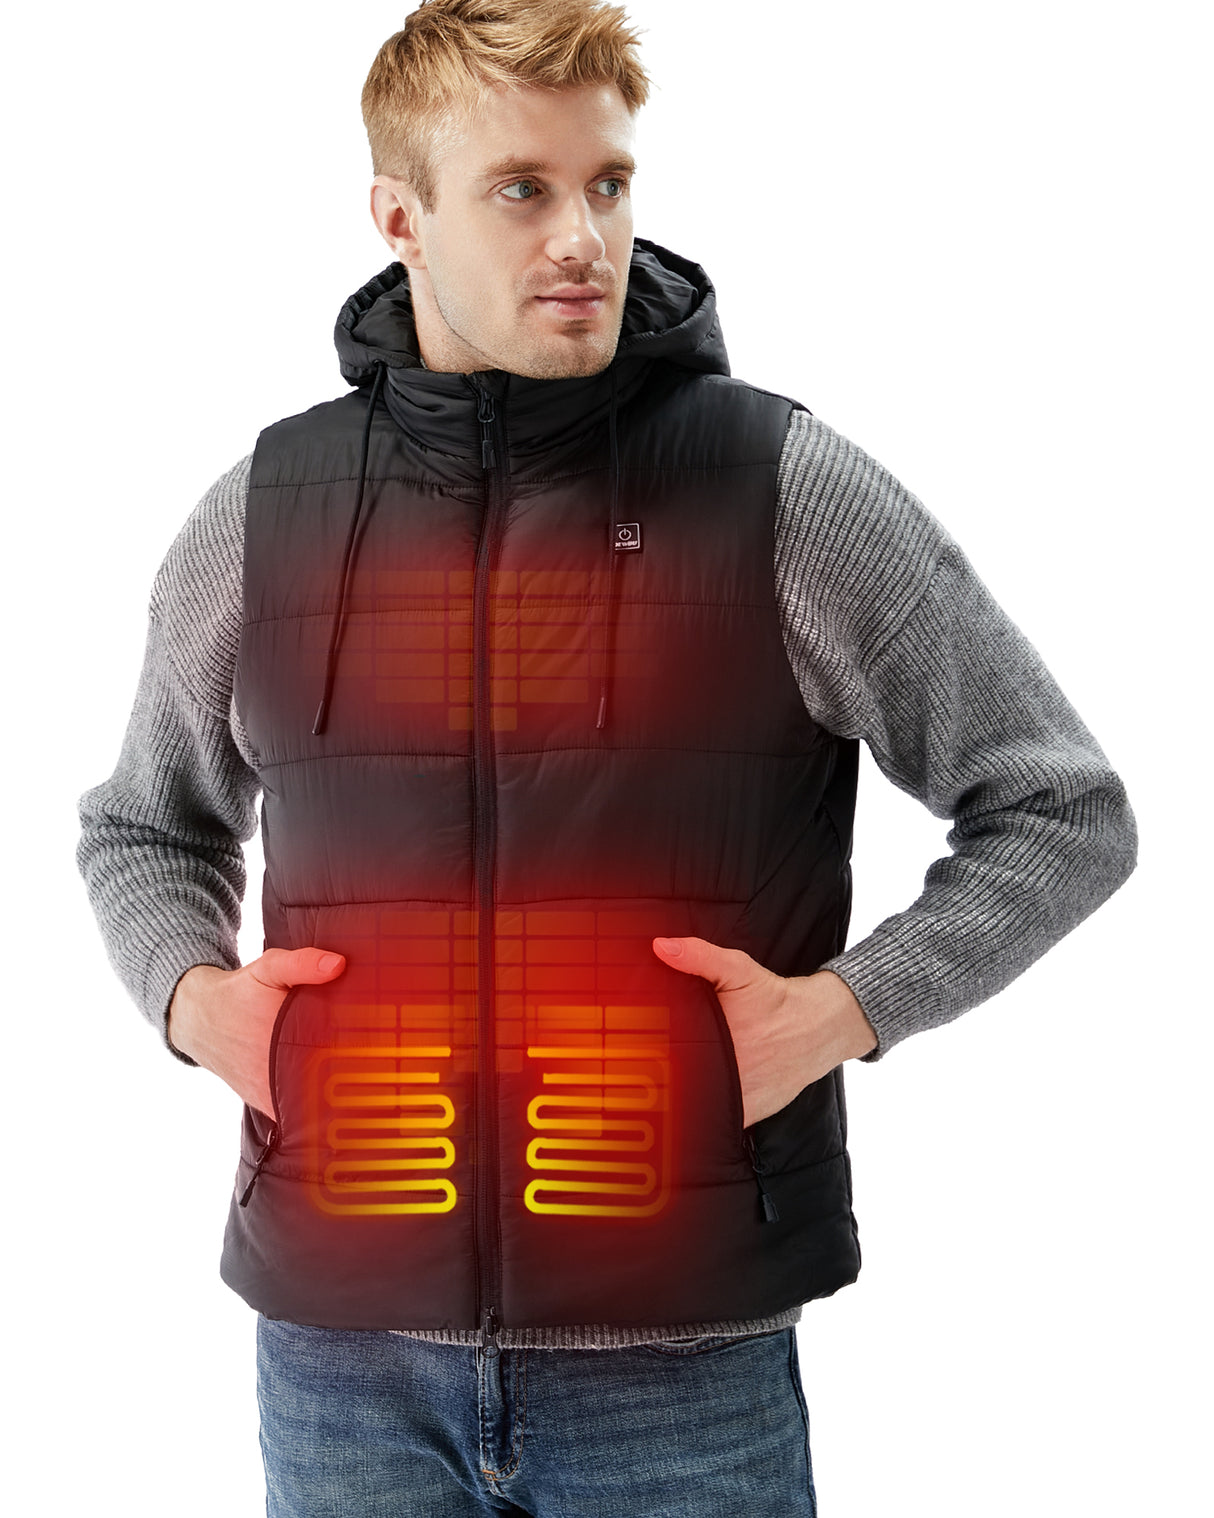 Men's Heated Vest Detachable Hood With 12V Battery Pack - Black